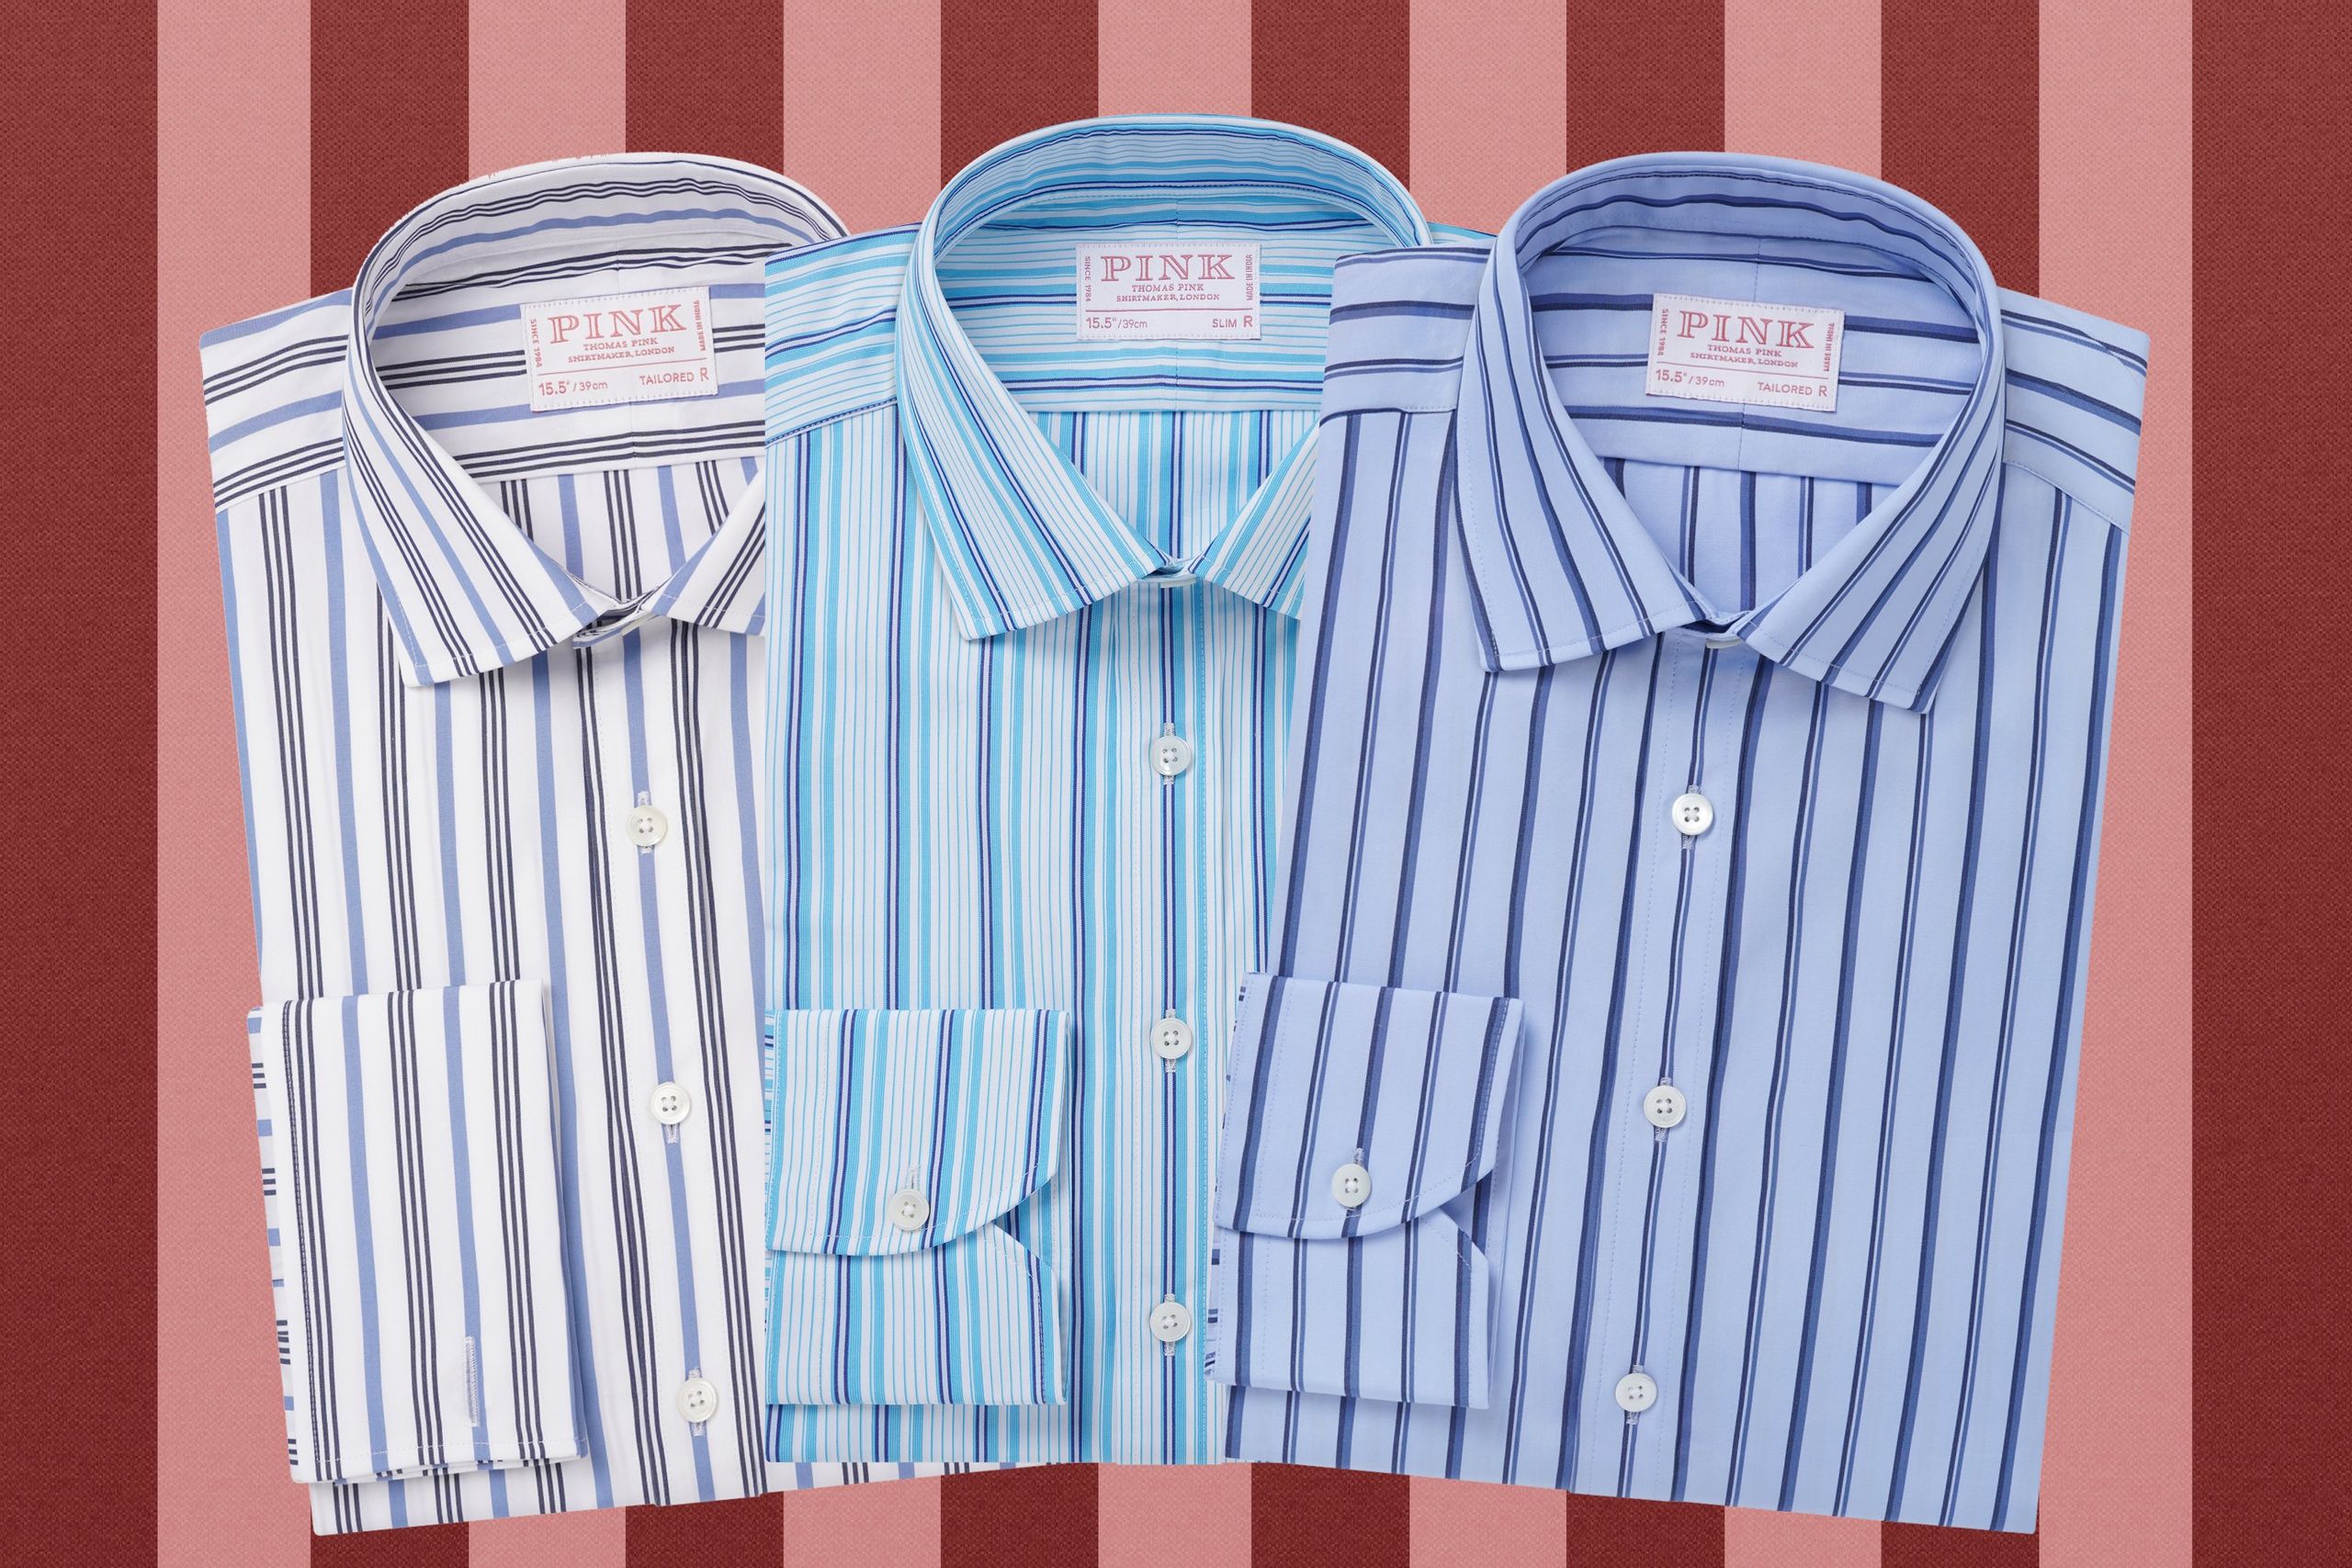 Trio of striped shirts